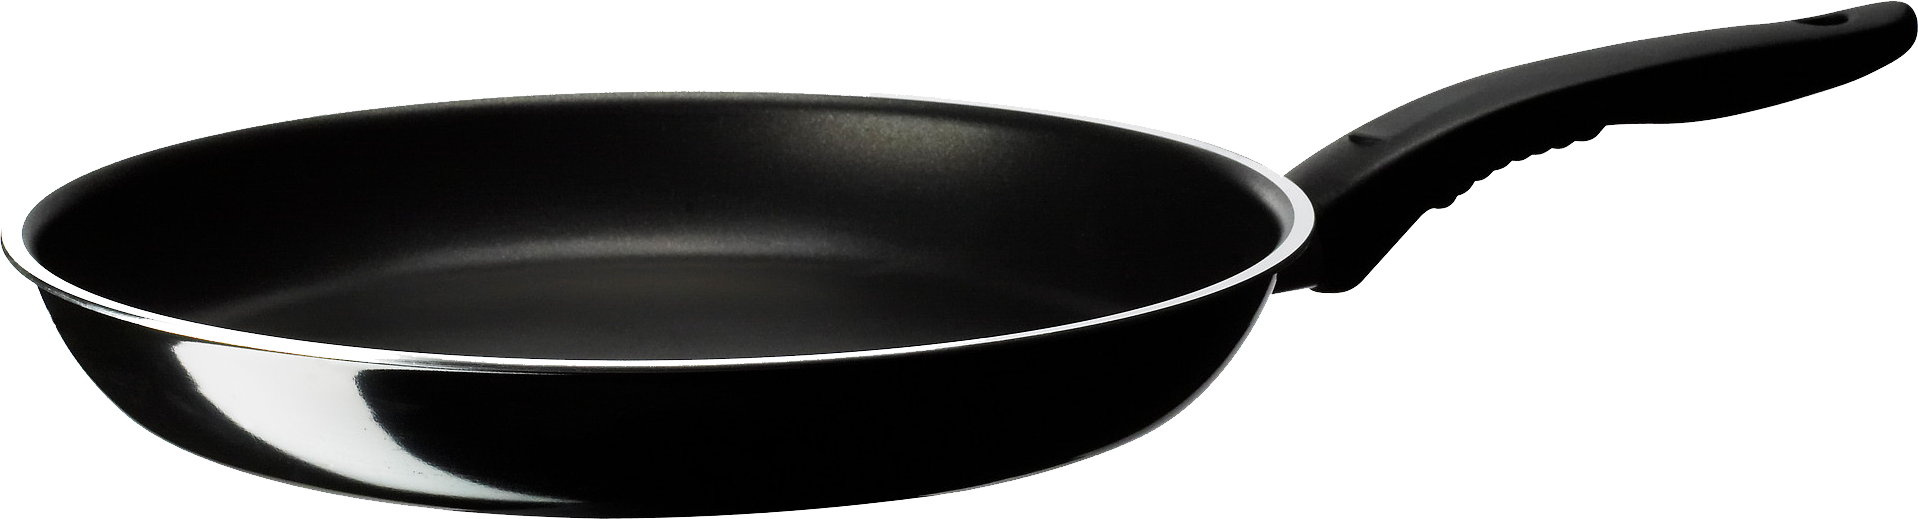 Frying Pan PNG - 8860